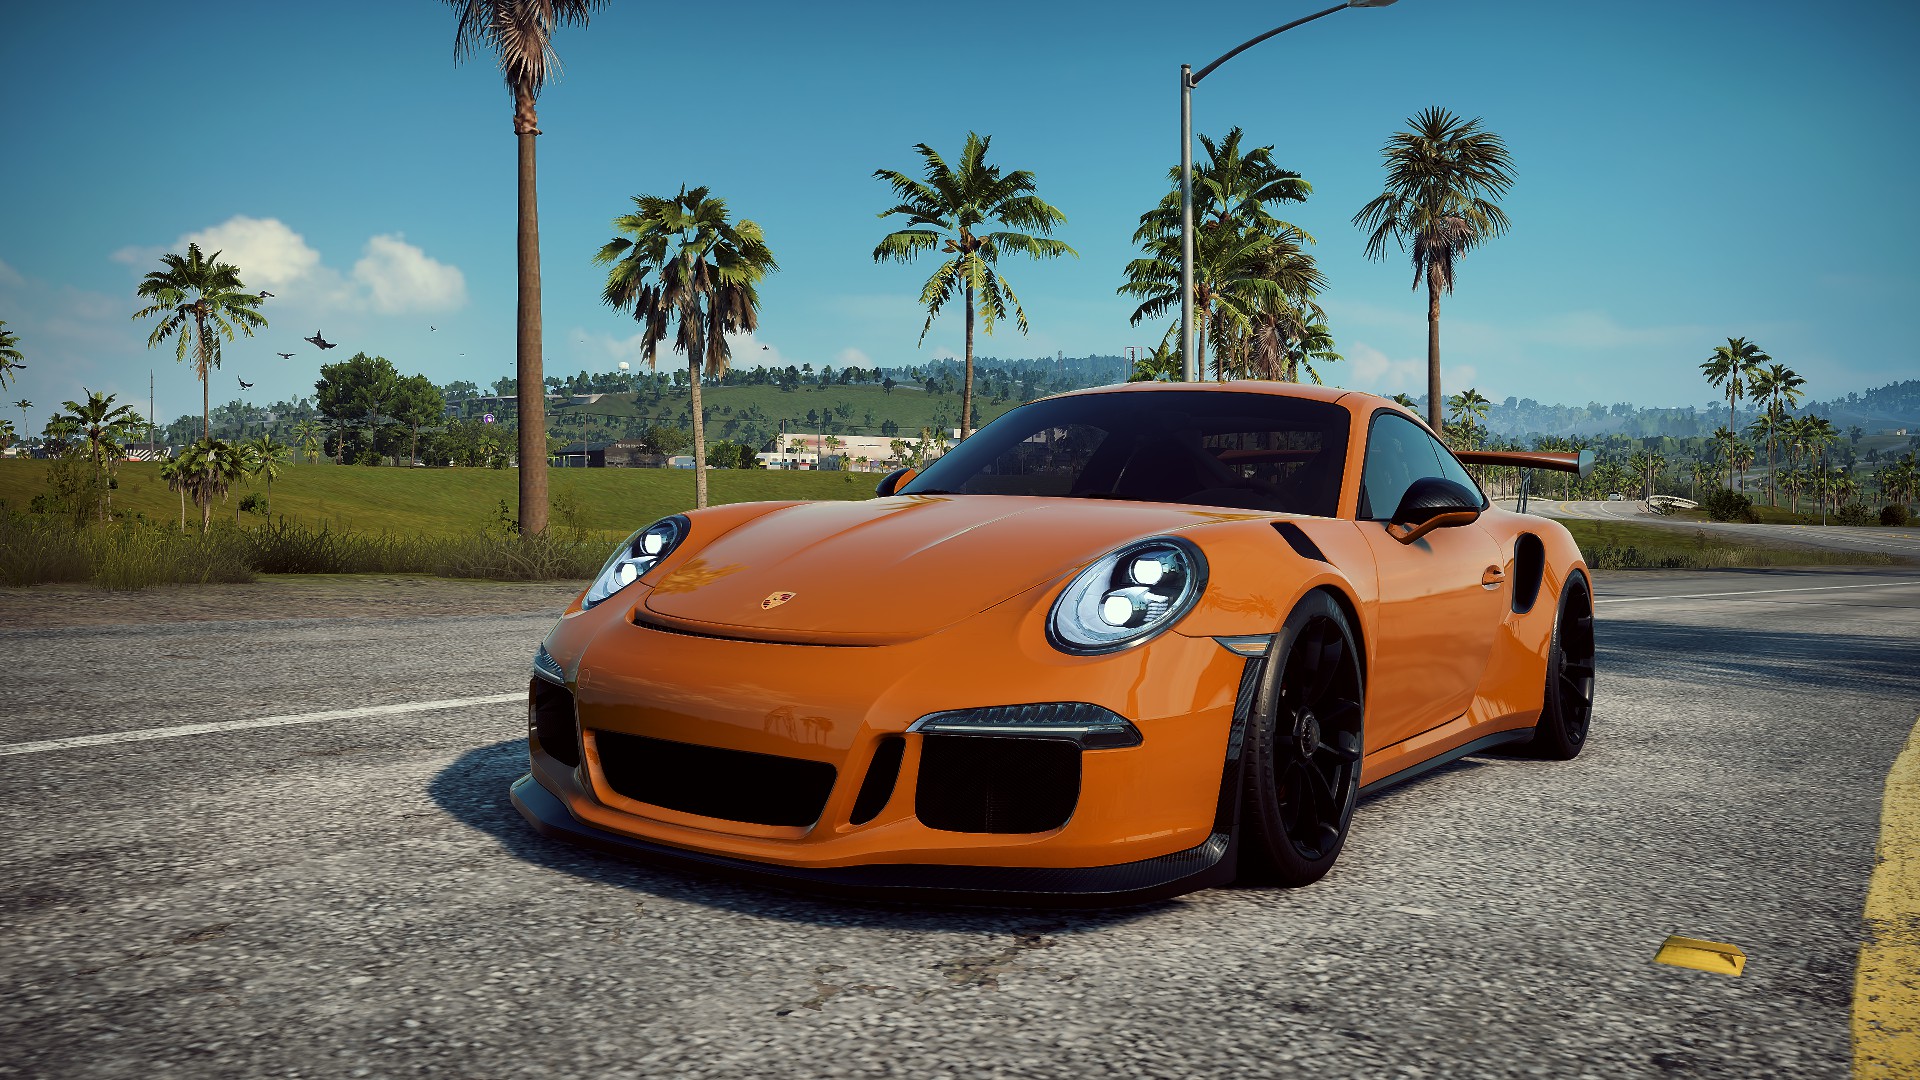 General 1920x1080 Porsche Porsche 911 GT3 R Porsche 911 car street view 4K Need for Speed: Heat vehicle road orange model trees grass video games